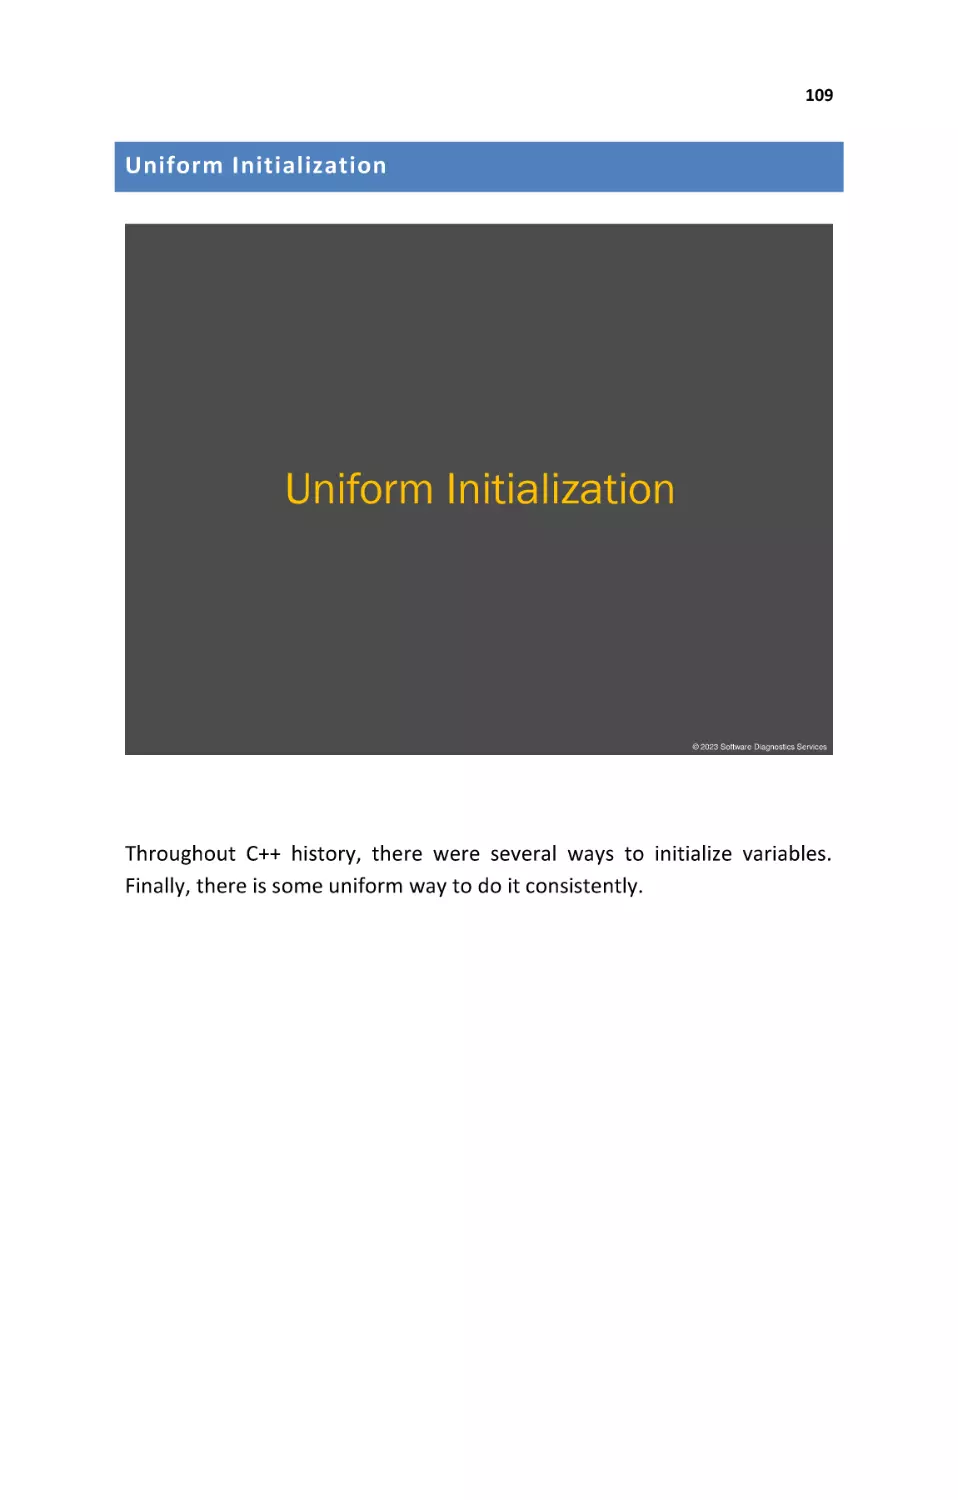 Uniform Initialization